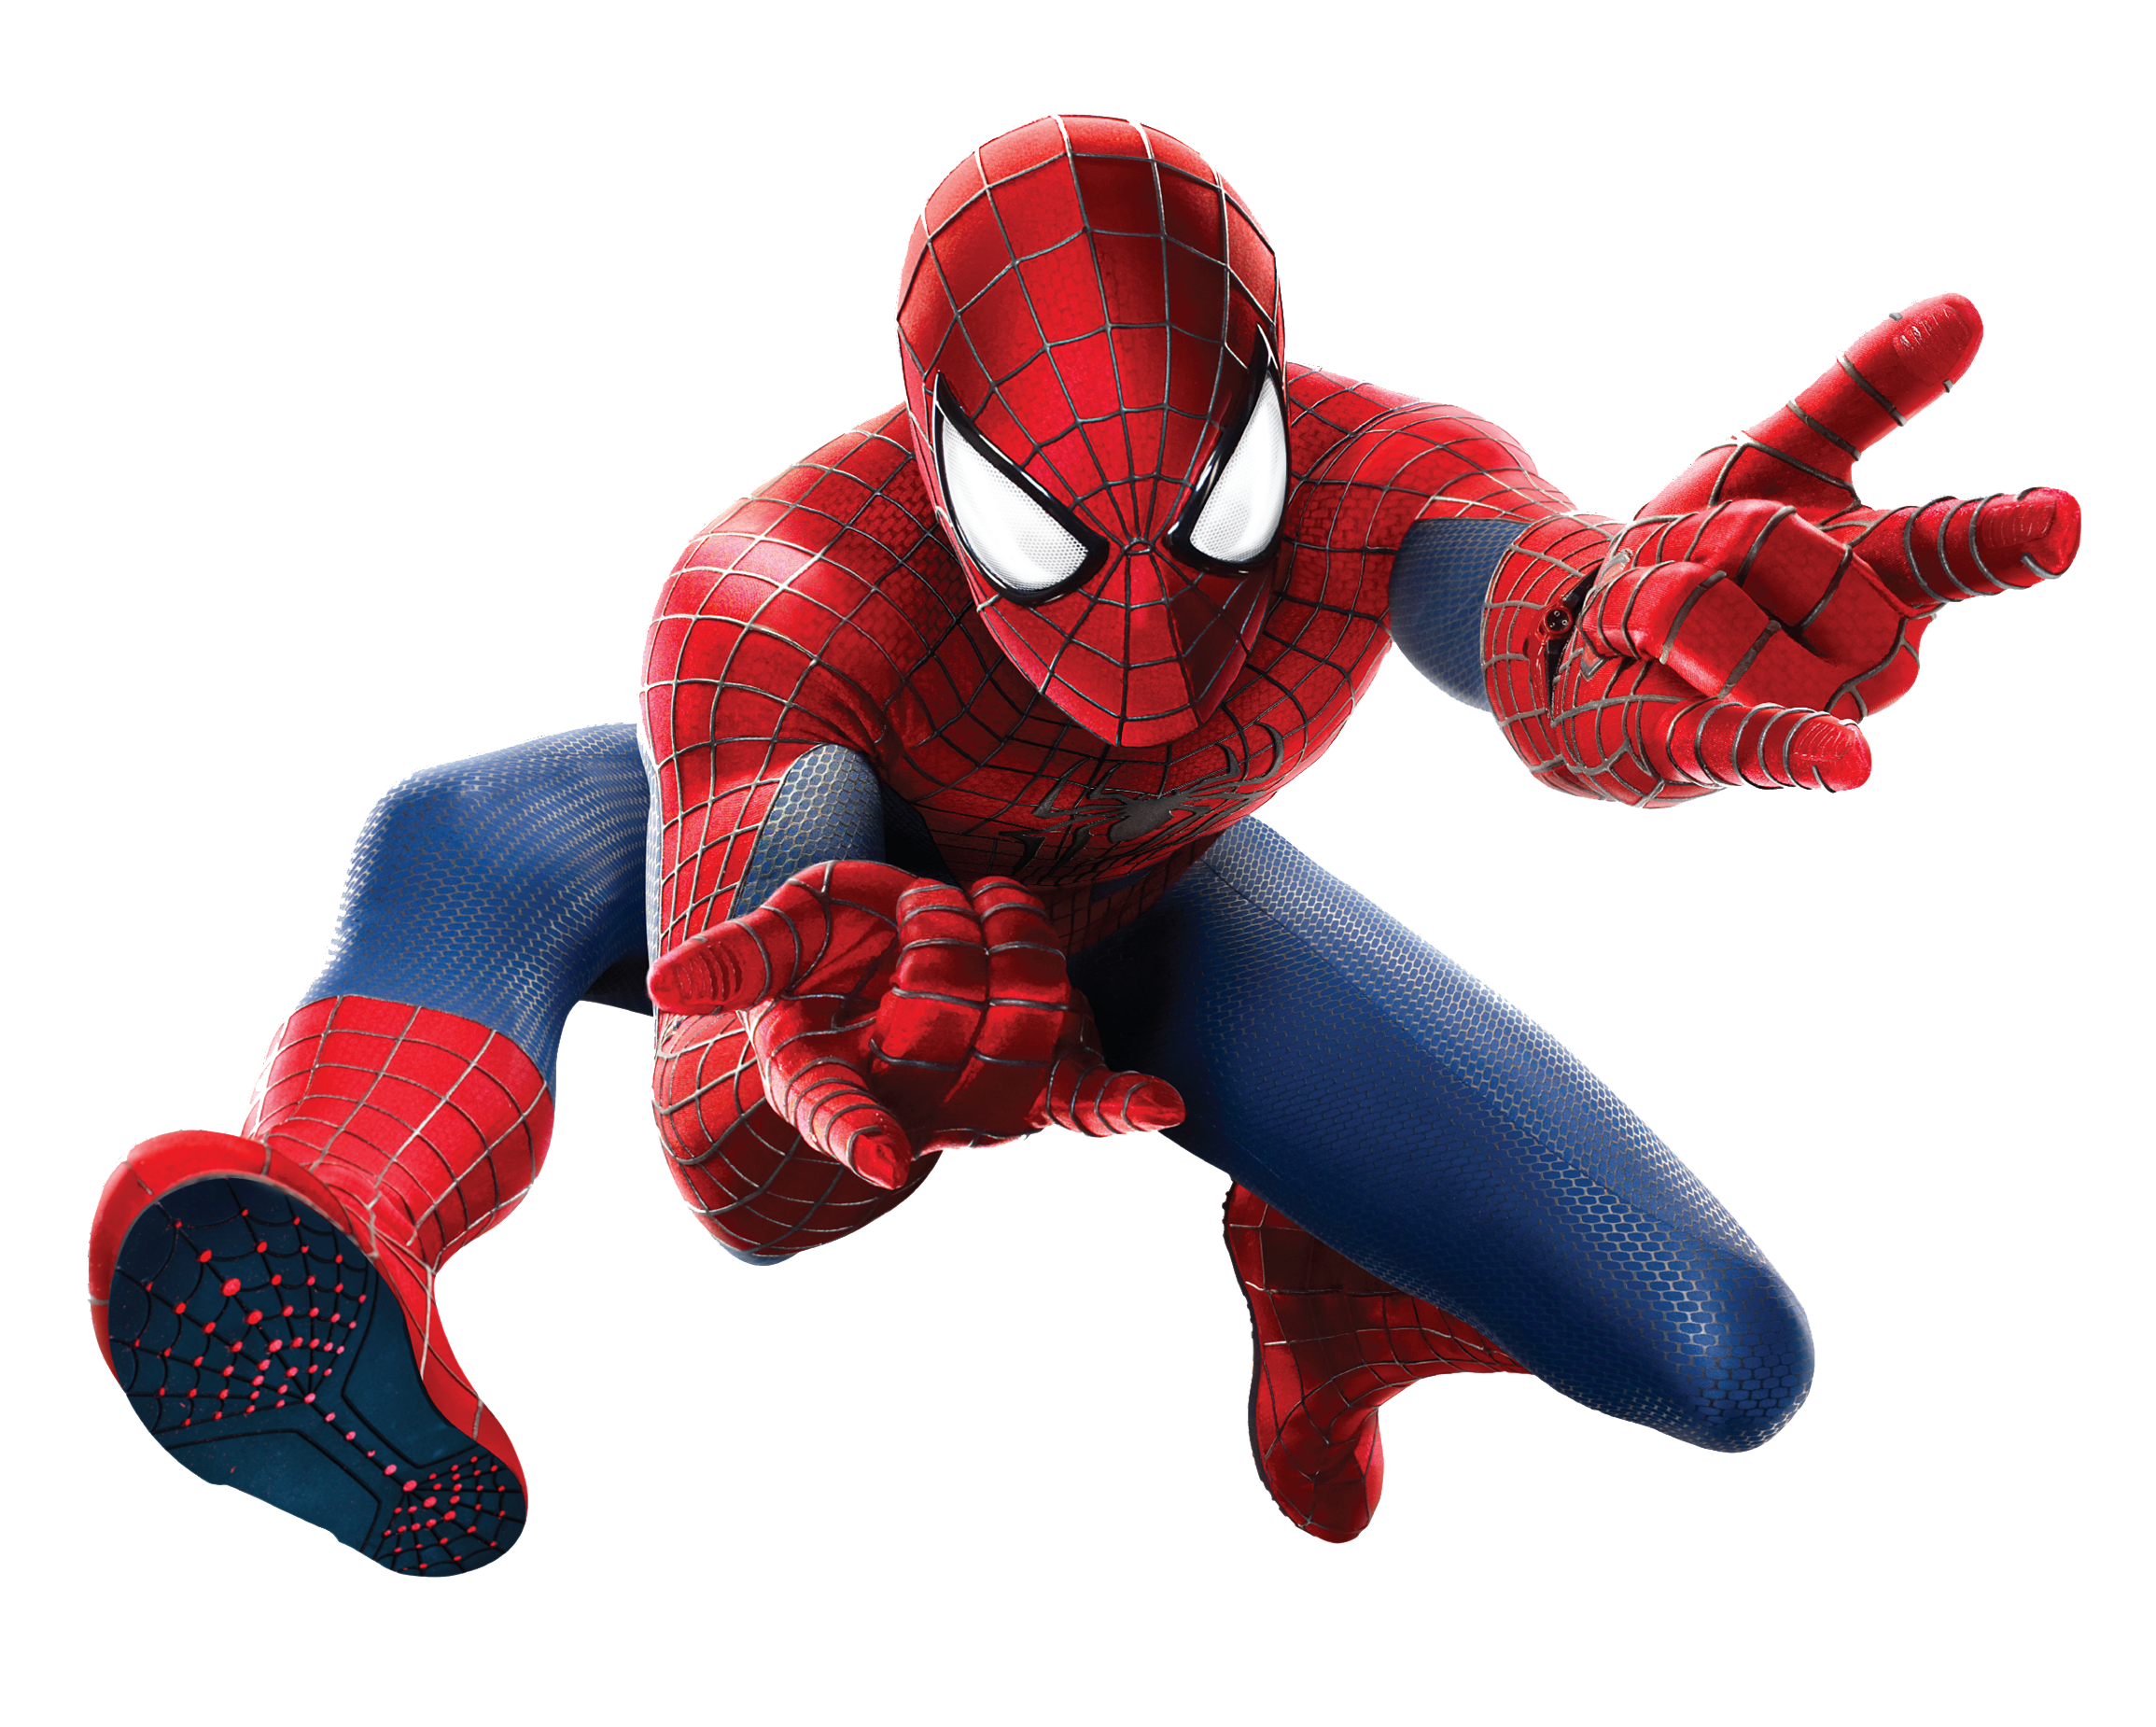 Spiderman Logo PNG Transparent Spiderman Logo.PNG Images. PlusPNG